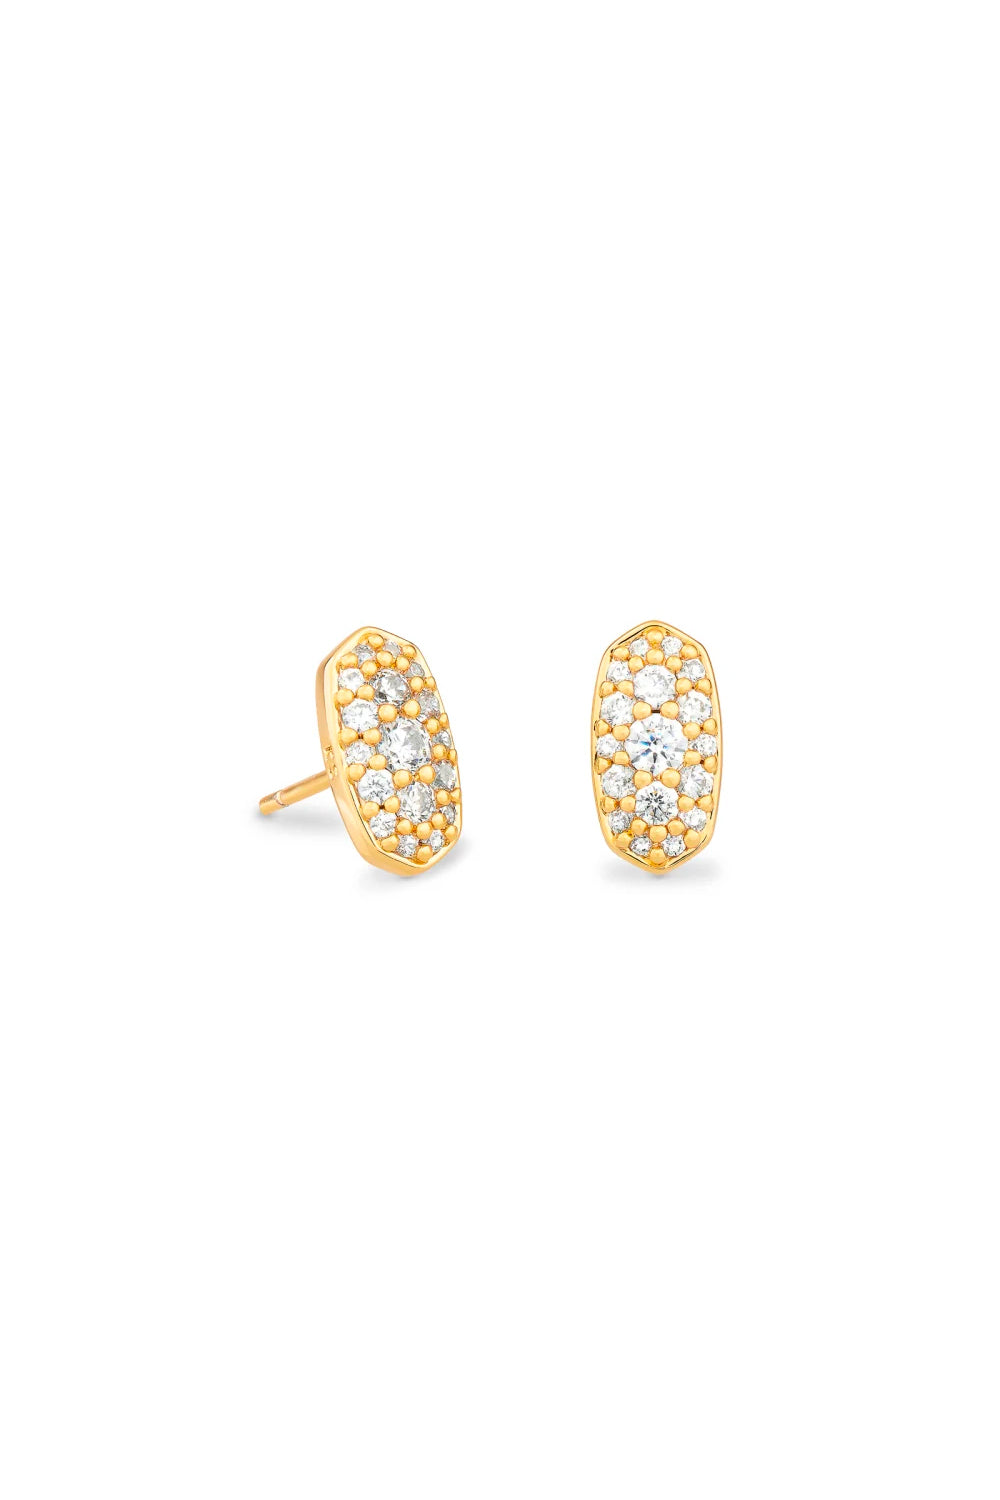 Kendra Scott: Grayson Gold Crystal Stud Earrings - White Crystal | Makk Fashions